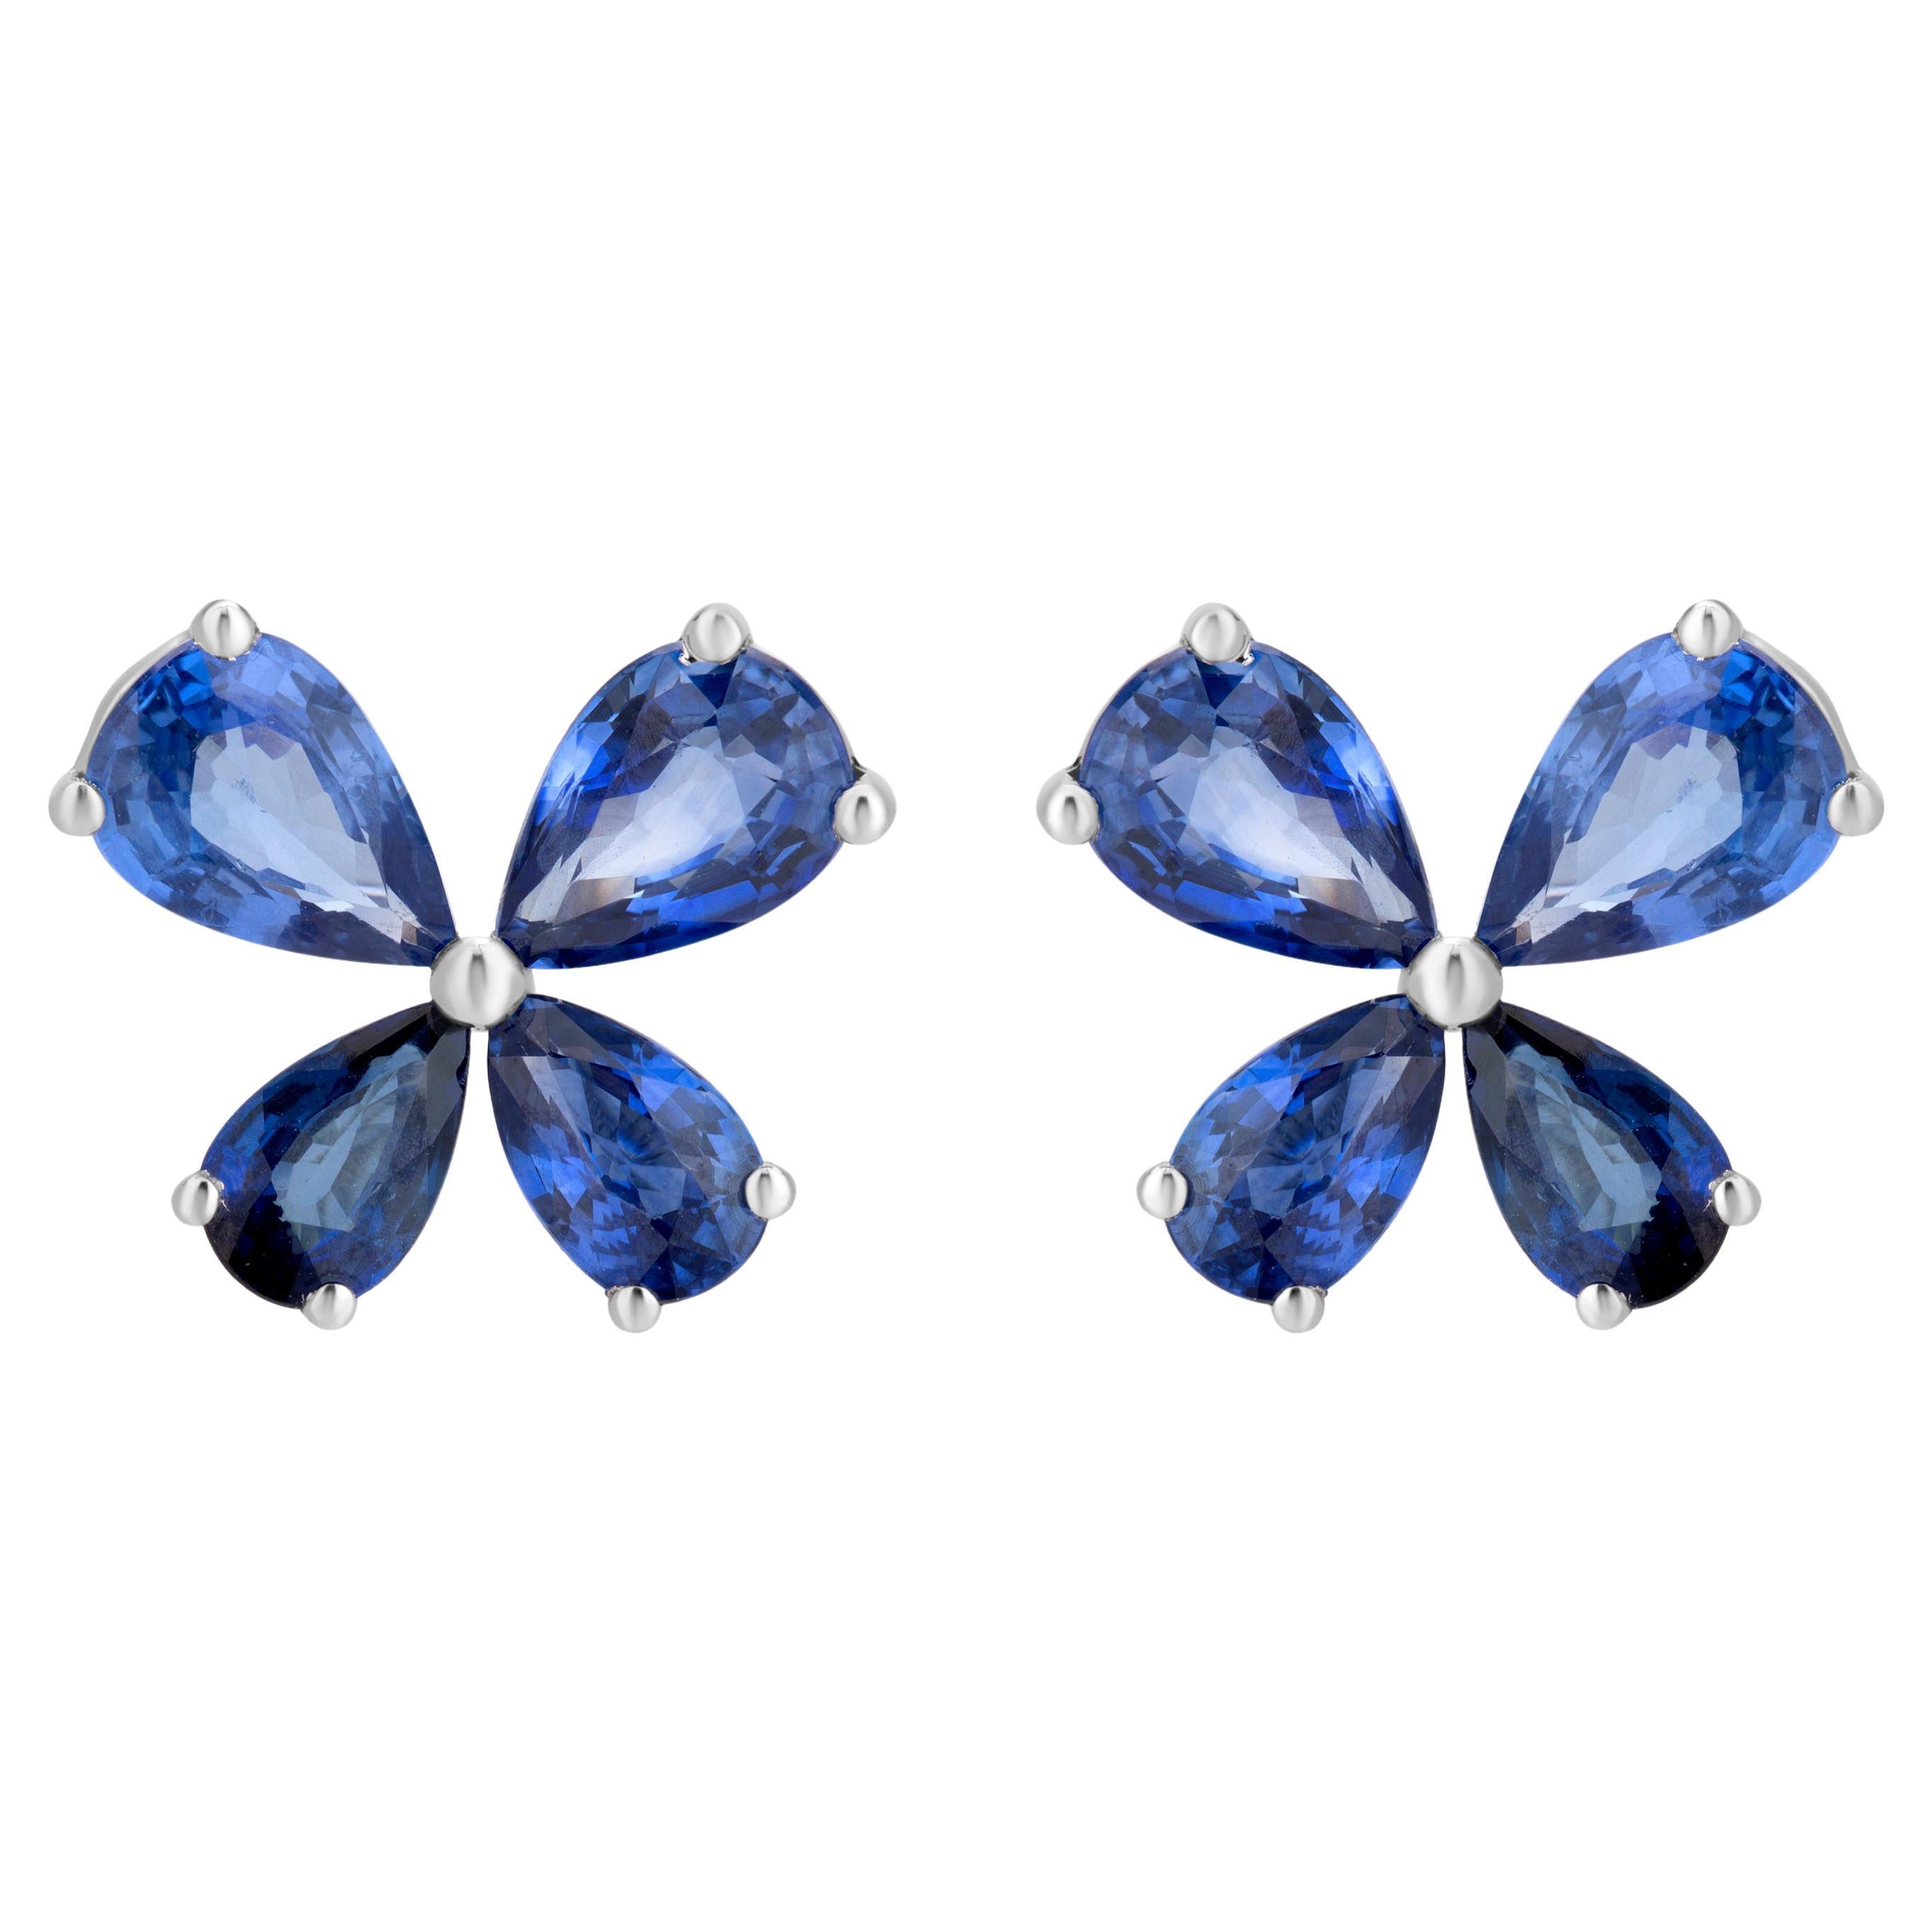 Gemistry 3.45 Cttw. Blue Sapphire Floral Stud Earrings in 18k White Gold